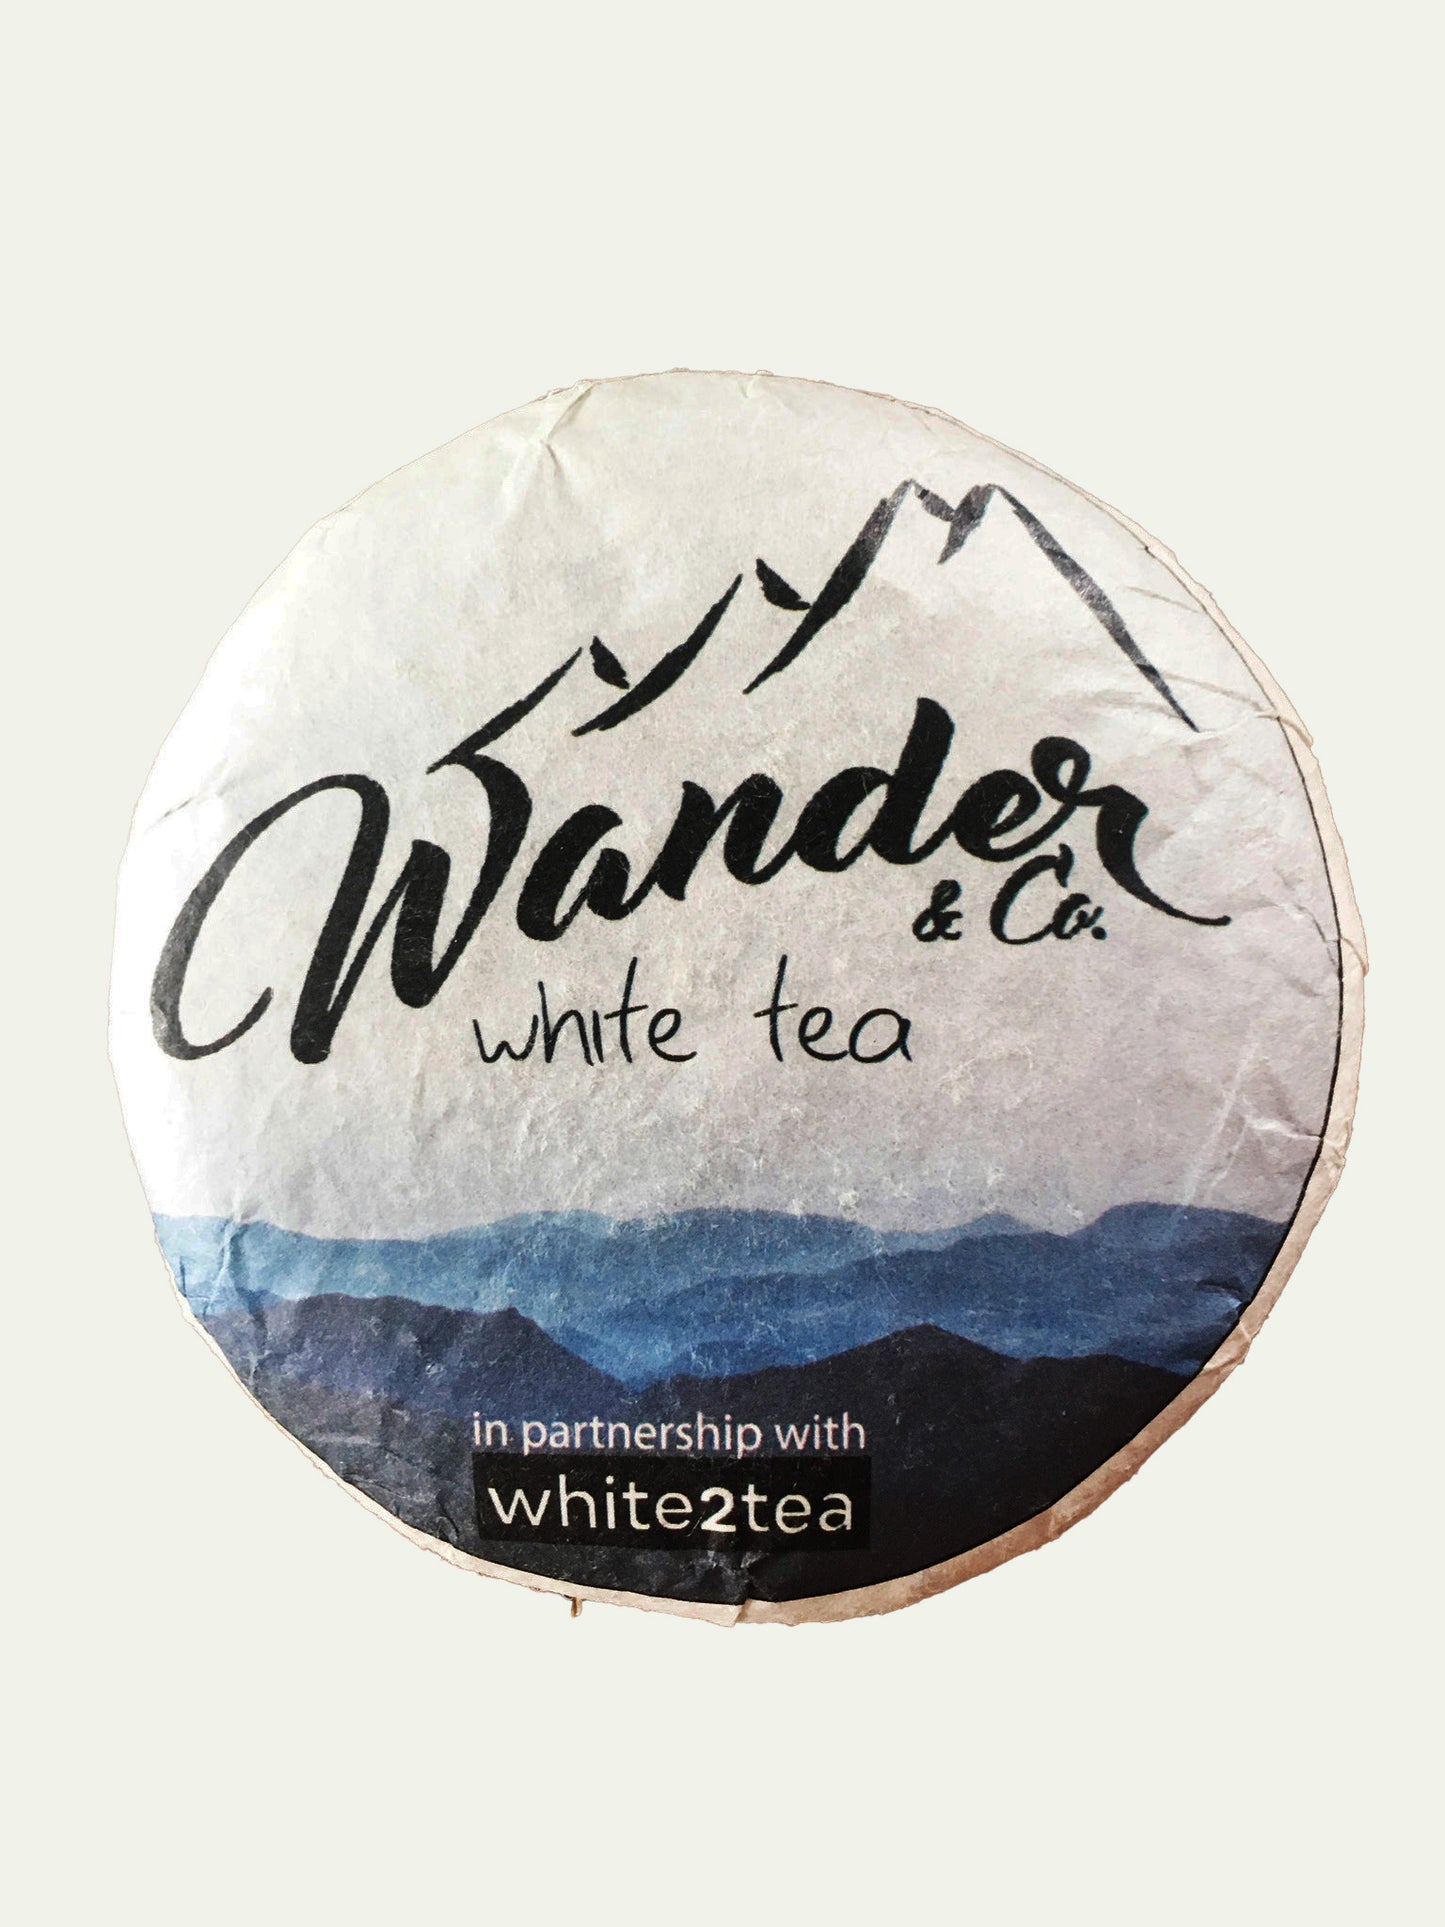 Wander & Co. White Tea